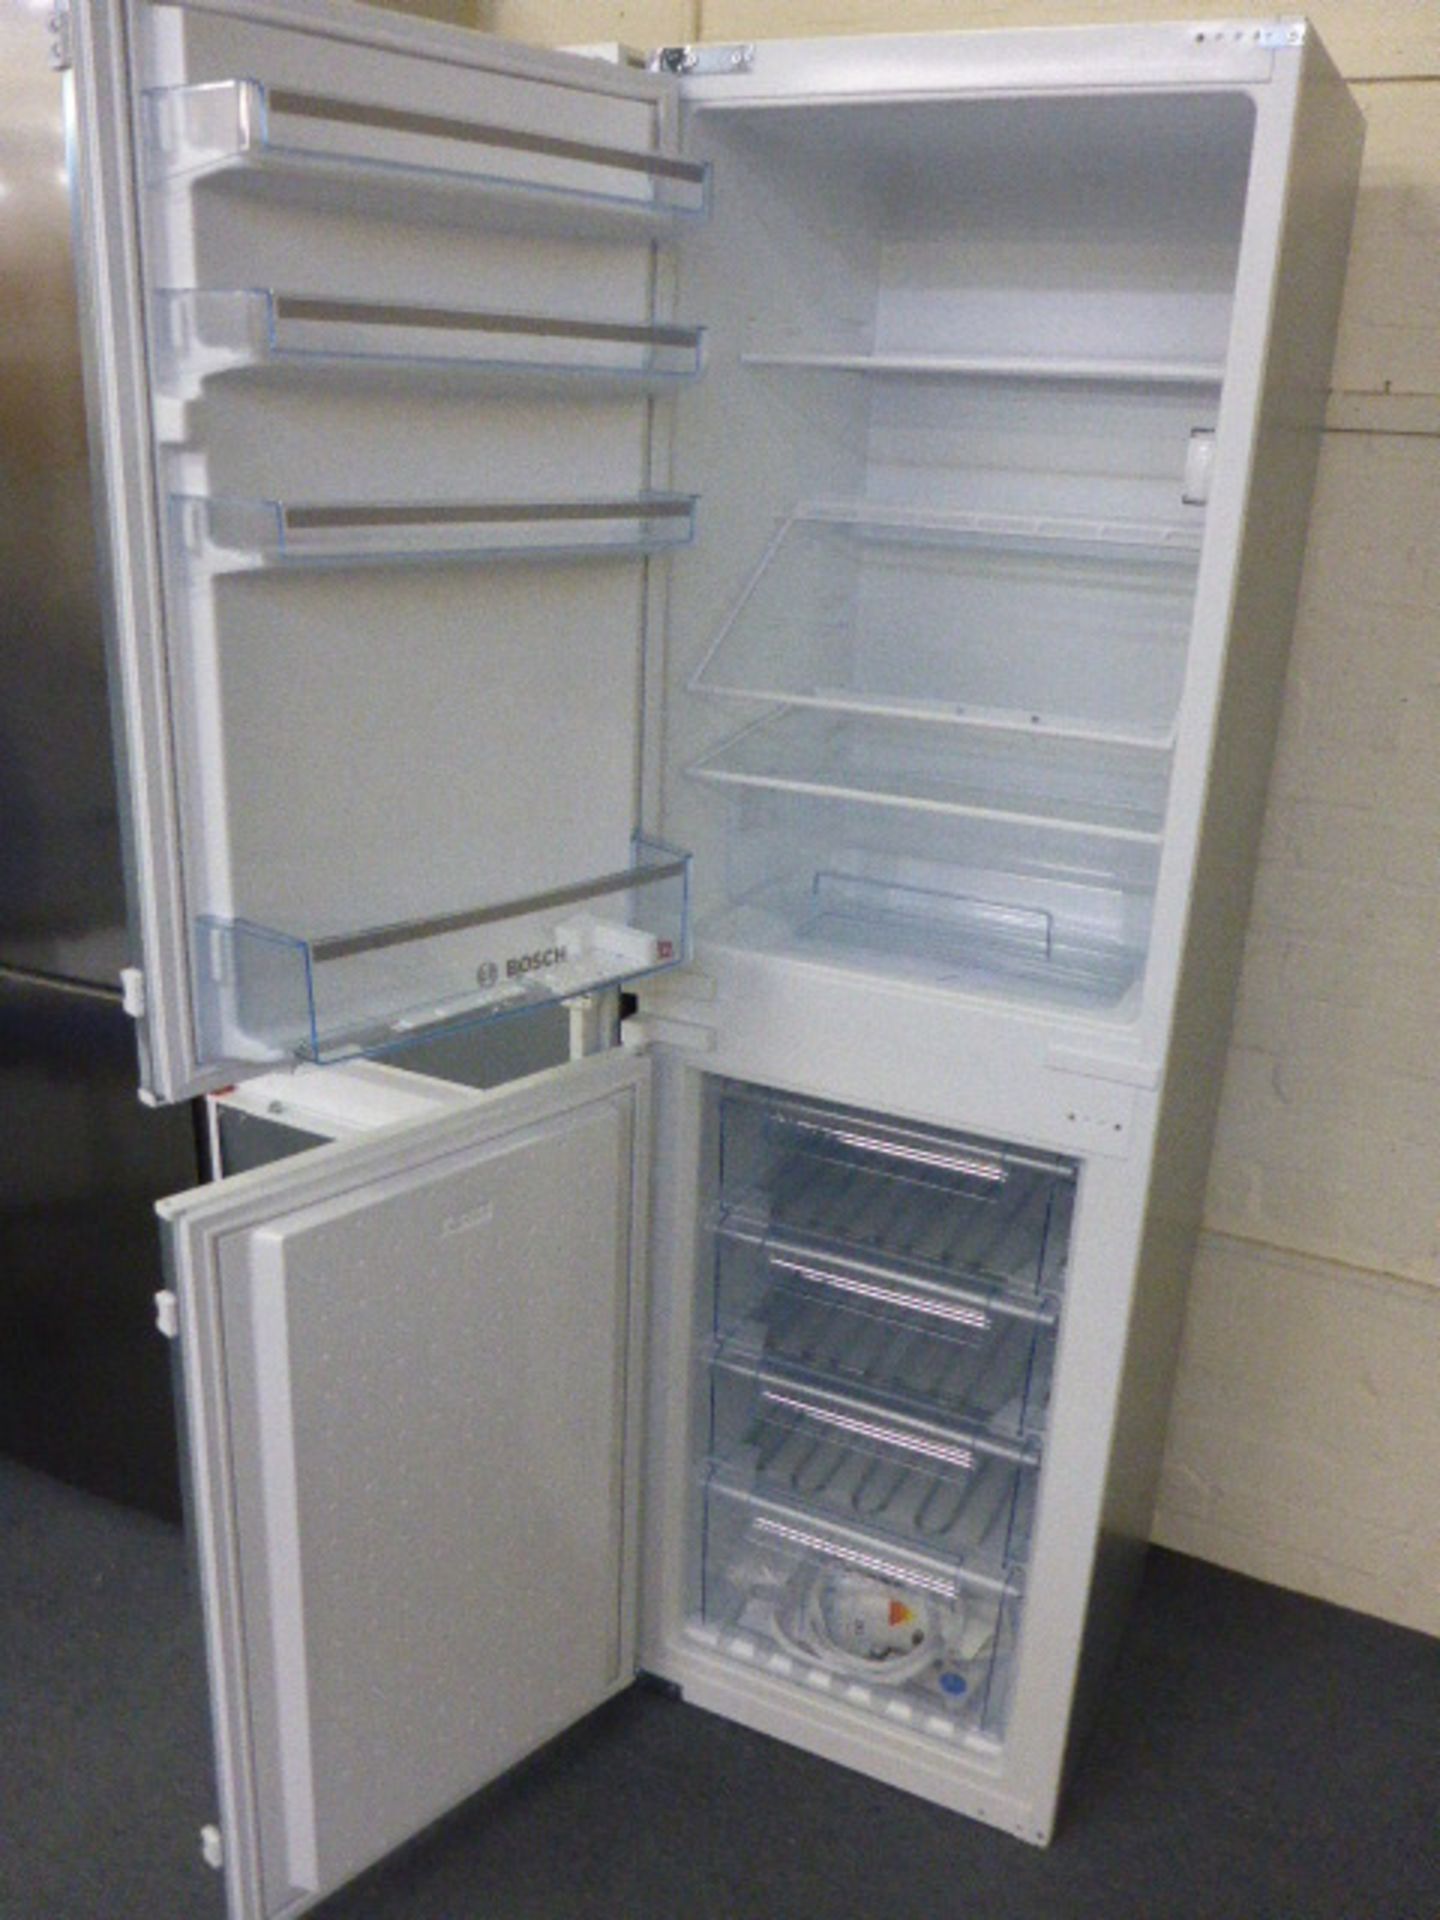 KIV32X23GBB Bosch Built-in automatic fridge-freezer - Image 2 of 2